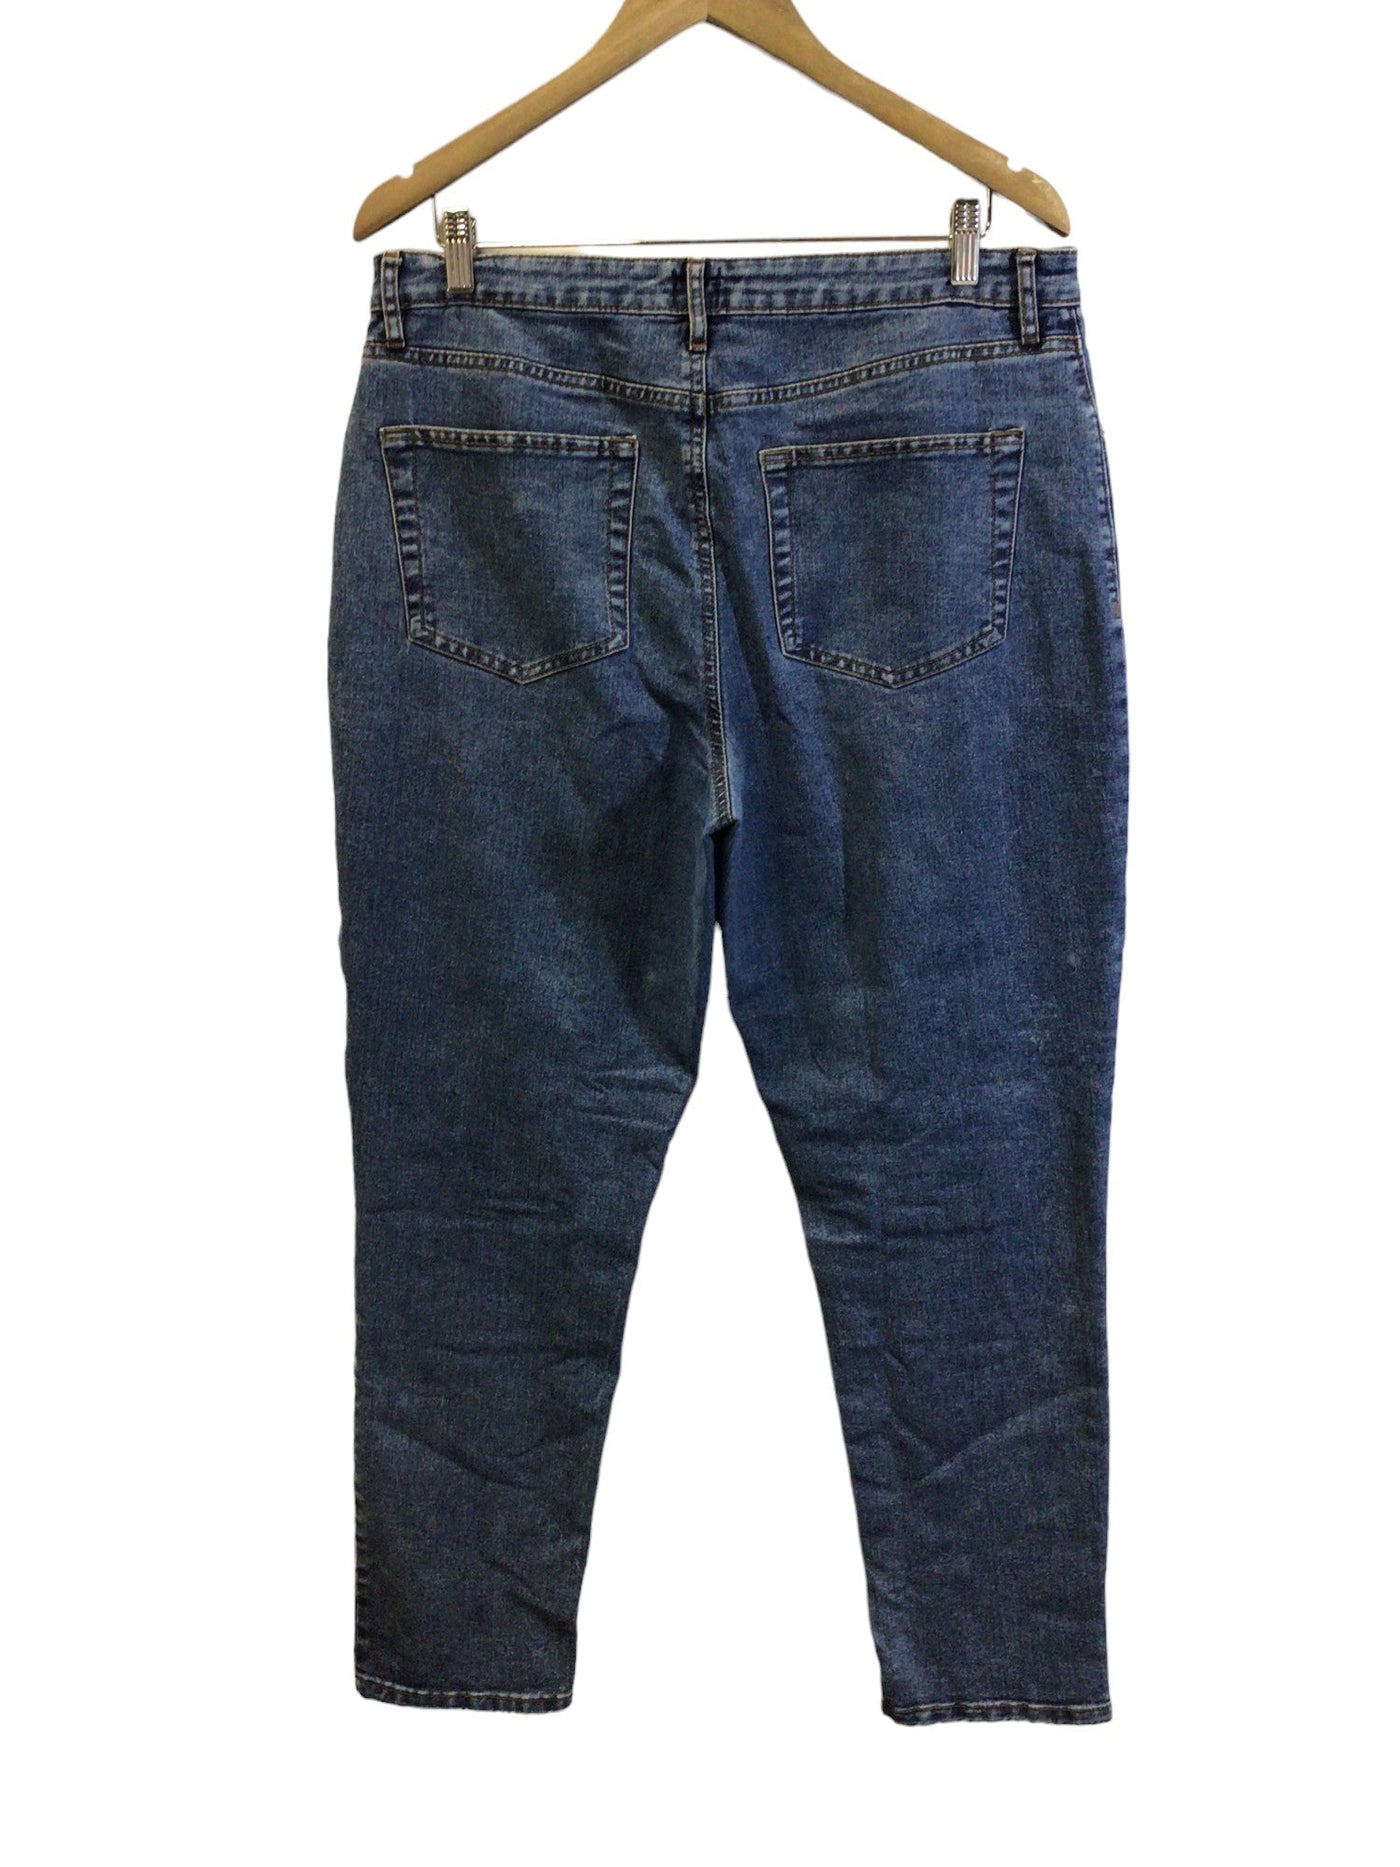 MILE END Women Straight-Legged Jeans Regular fit in Blue - Size 3 | 15 $ KOOP